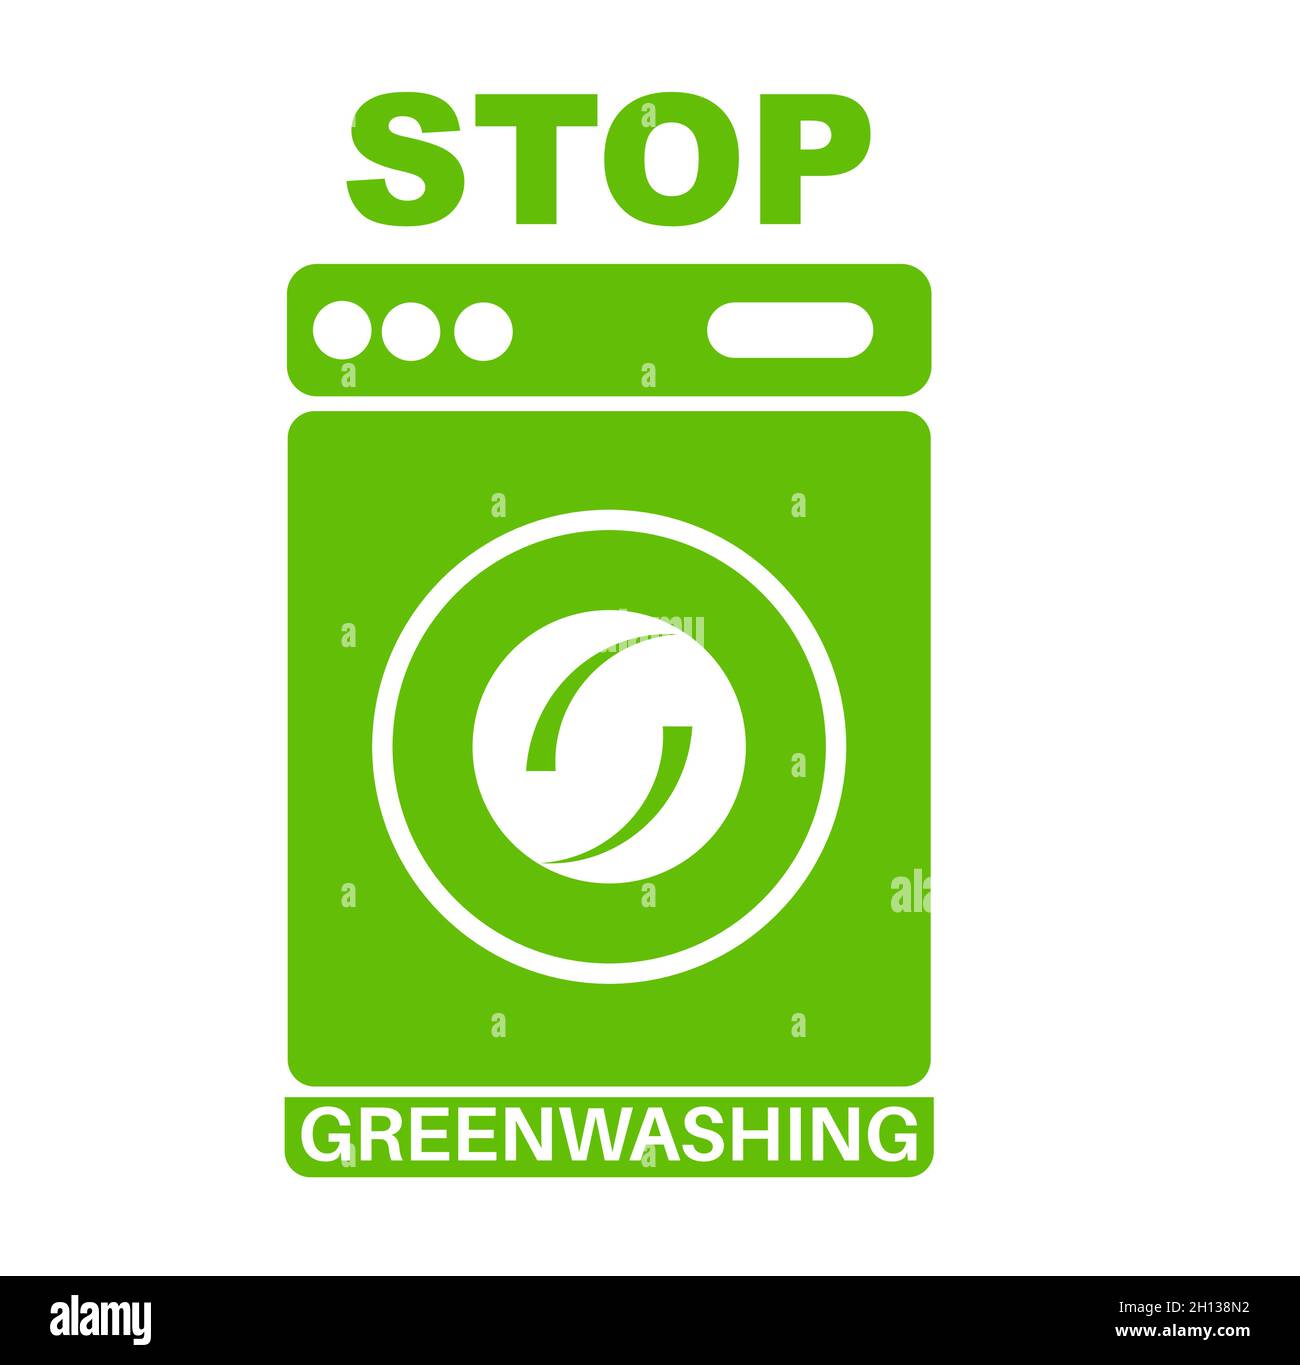 Greenwashing Konsept Vektorgrafik auf weißem Hintergrund Stock Vektor